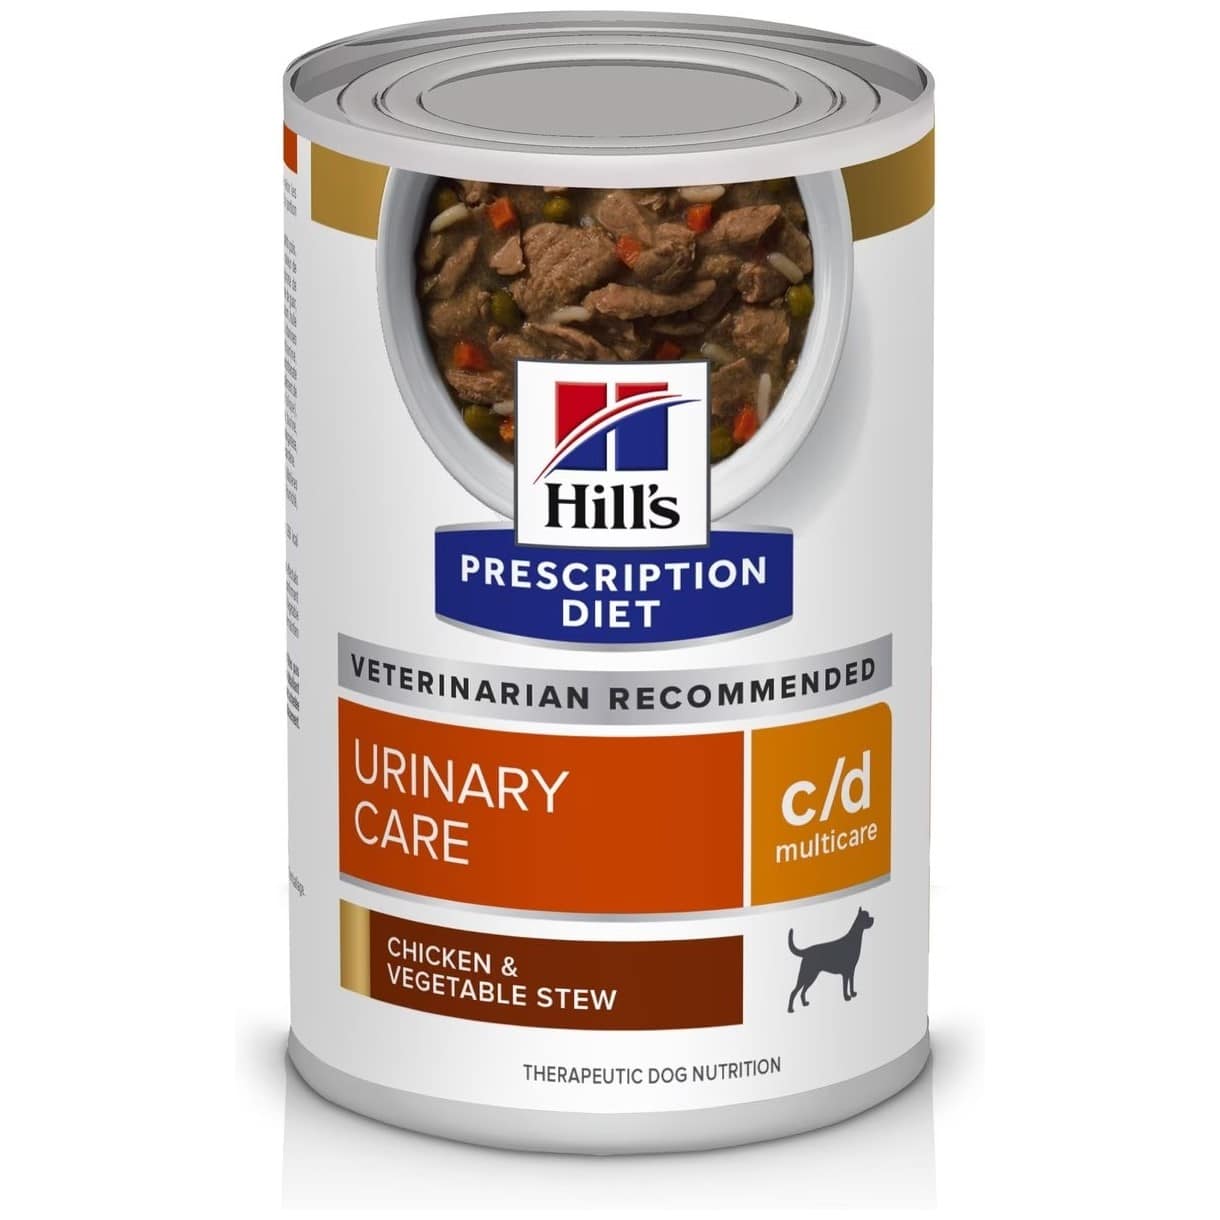 Hill's Prescription Diet cd Multicare Urinary Care Chicken & Vegetable Stew Flavor Wet Dog Food